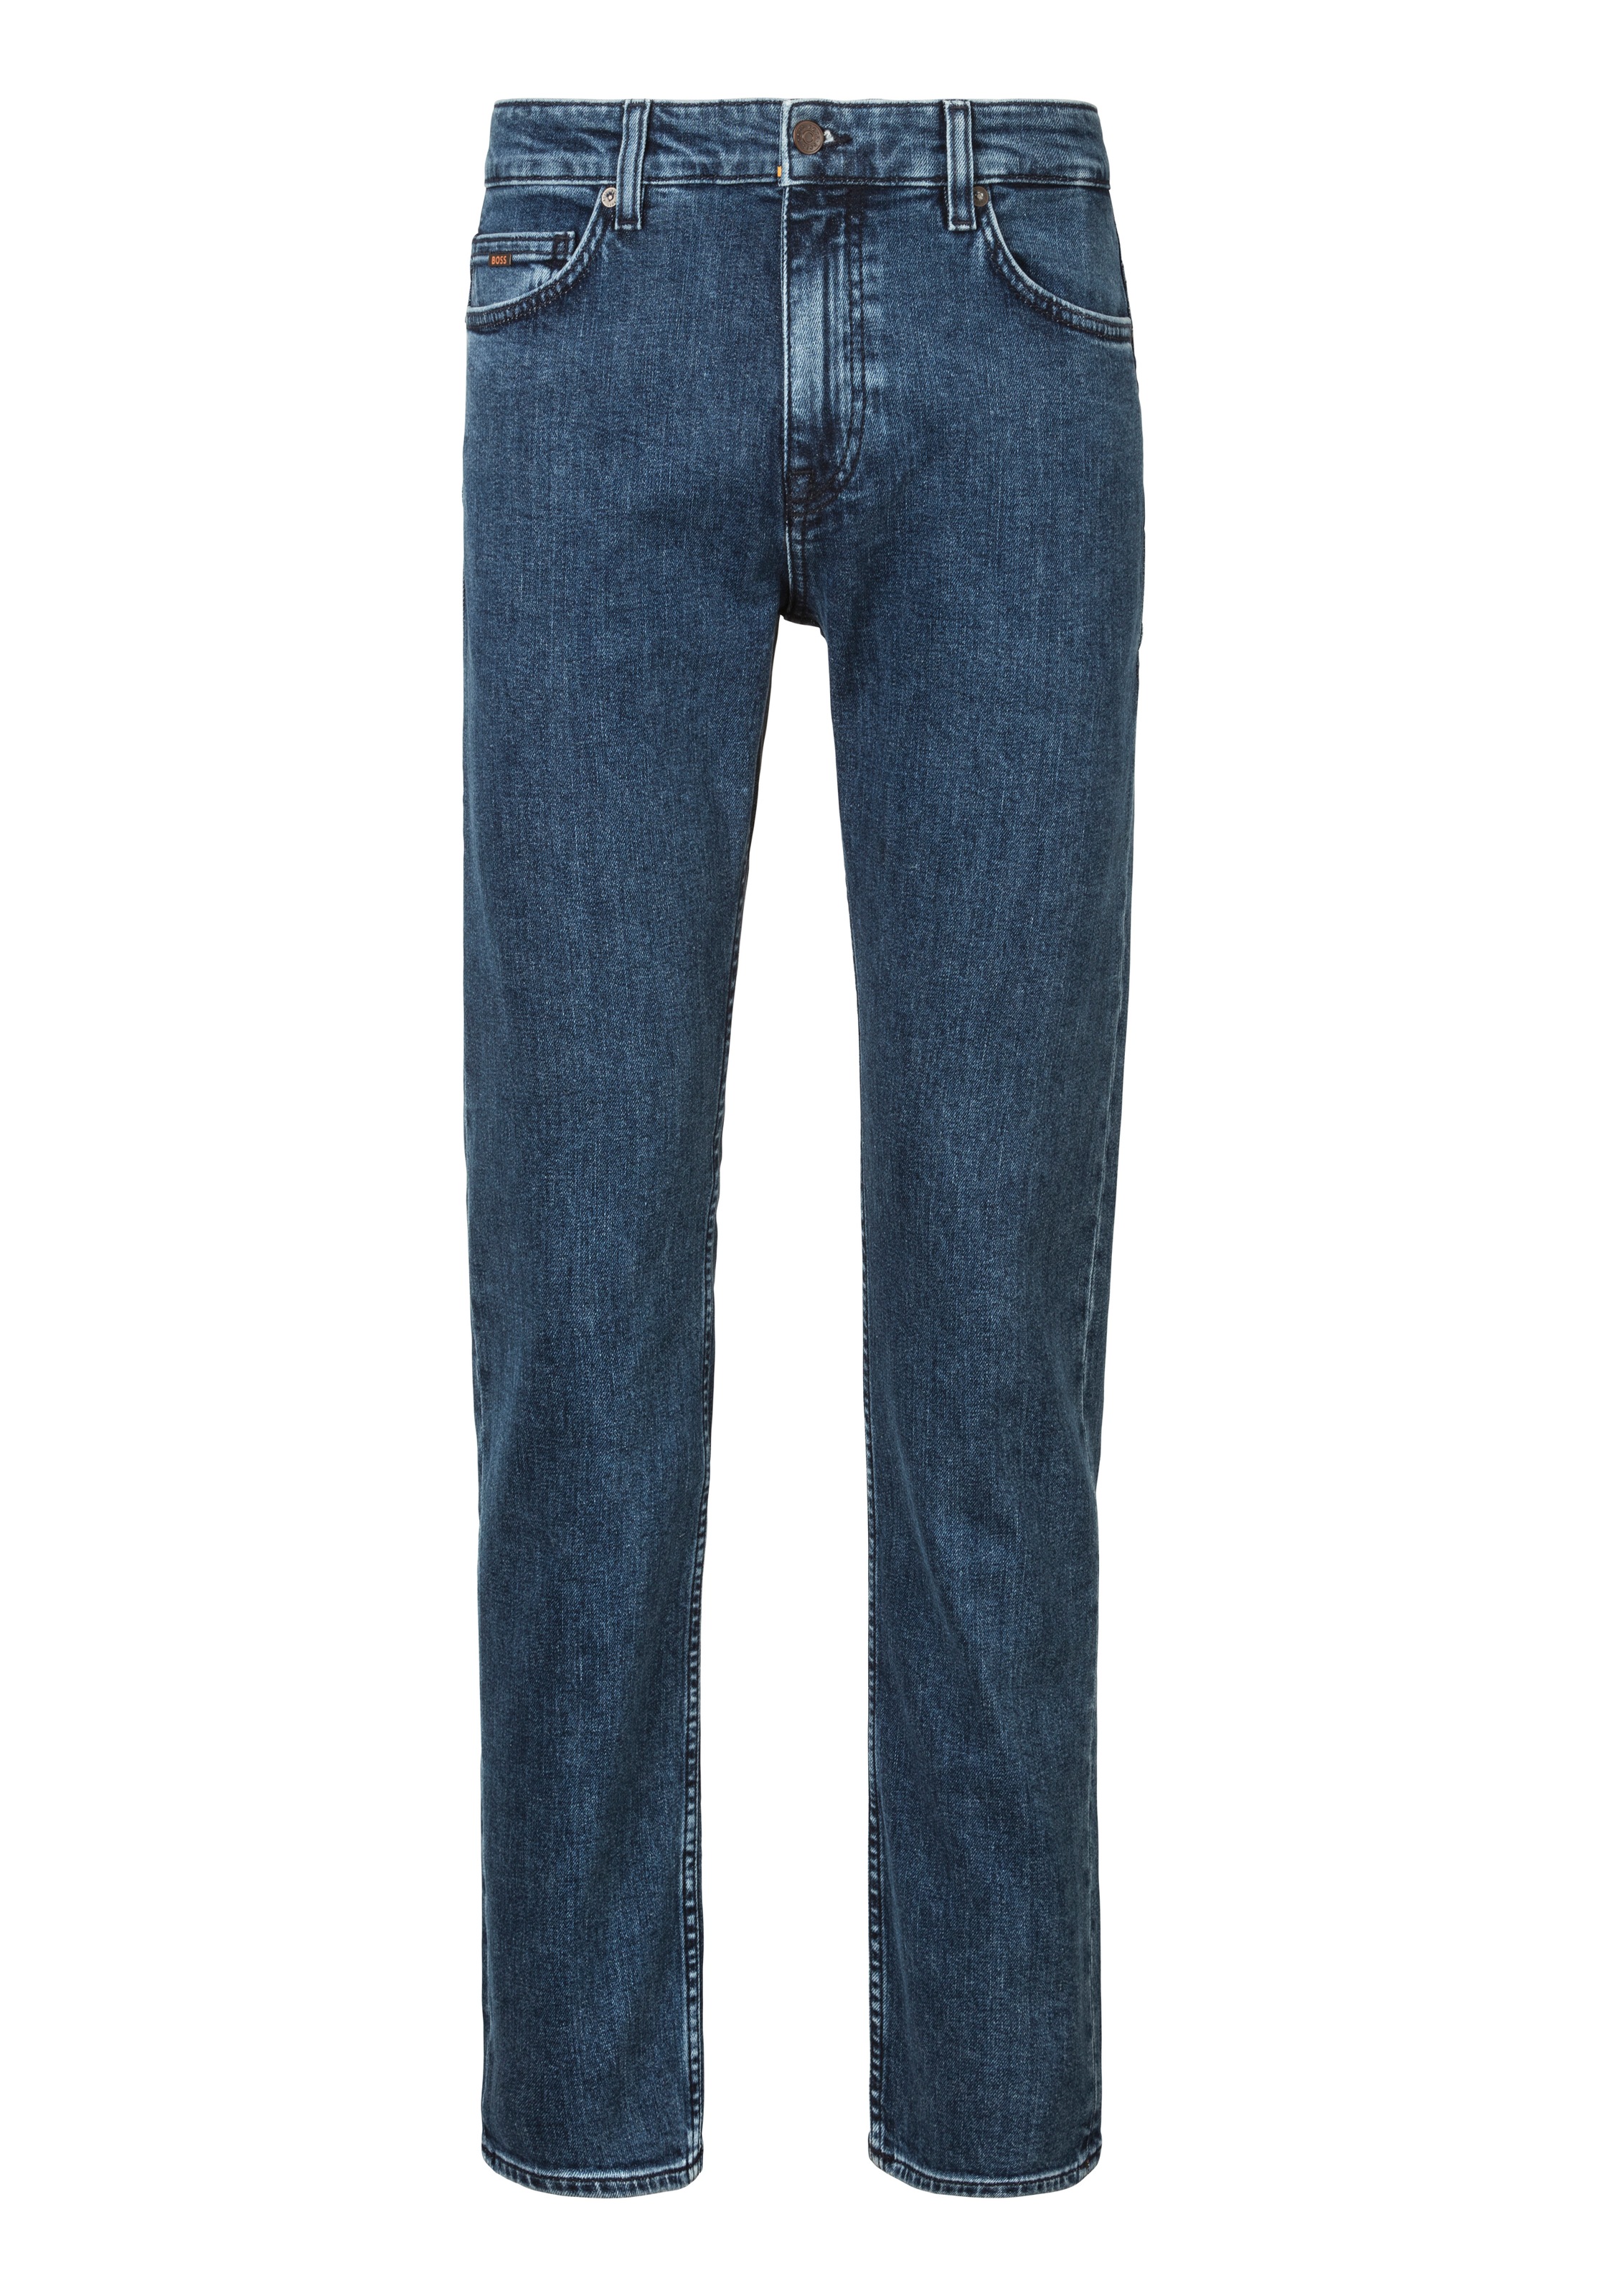 BOSS ORANGE Slim-fit-Jeans »Delaware BC-C«, mit Coin-Pocket